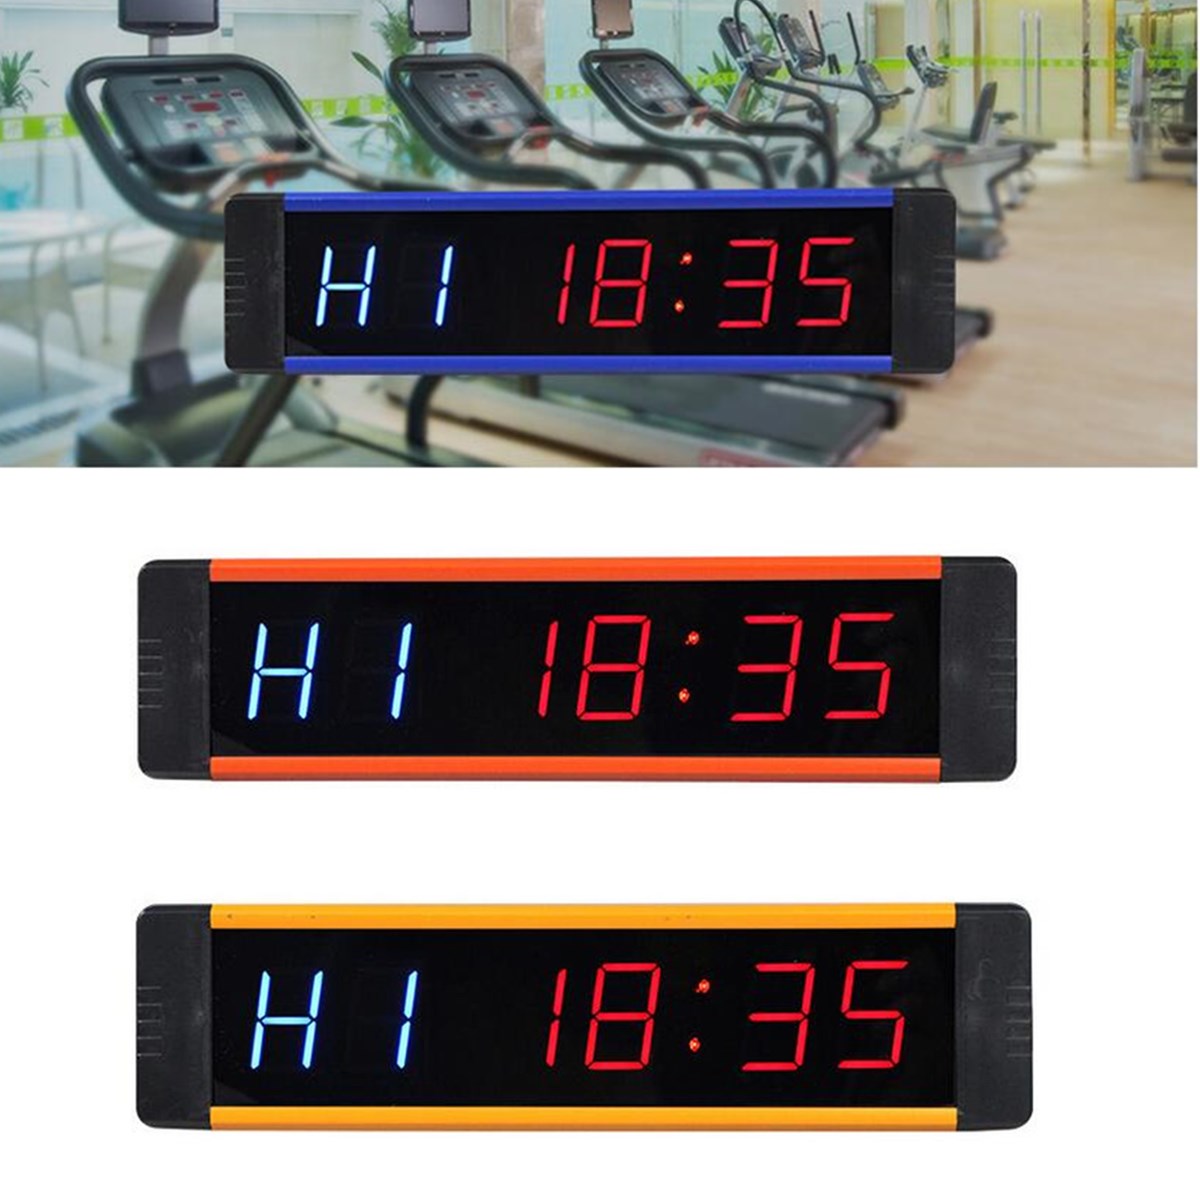 Gym wall timer